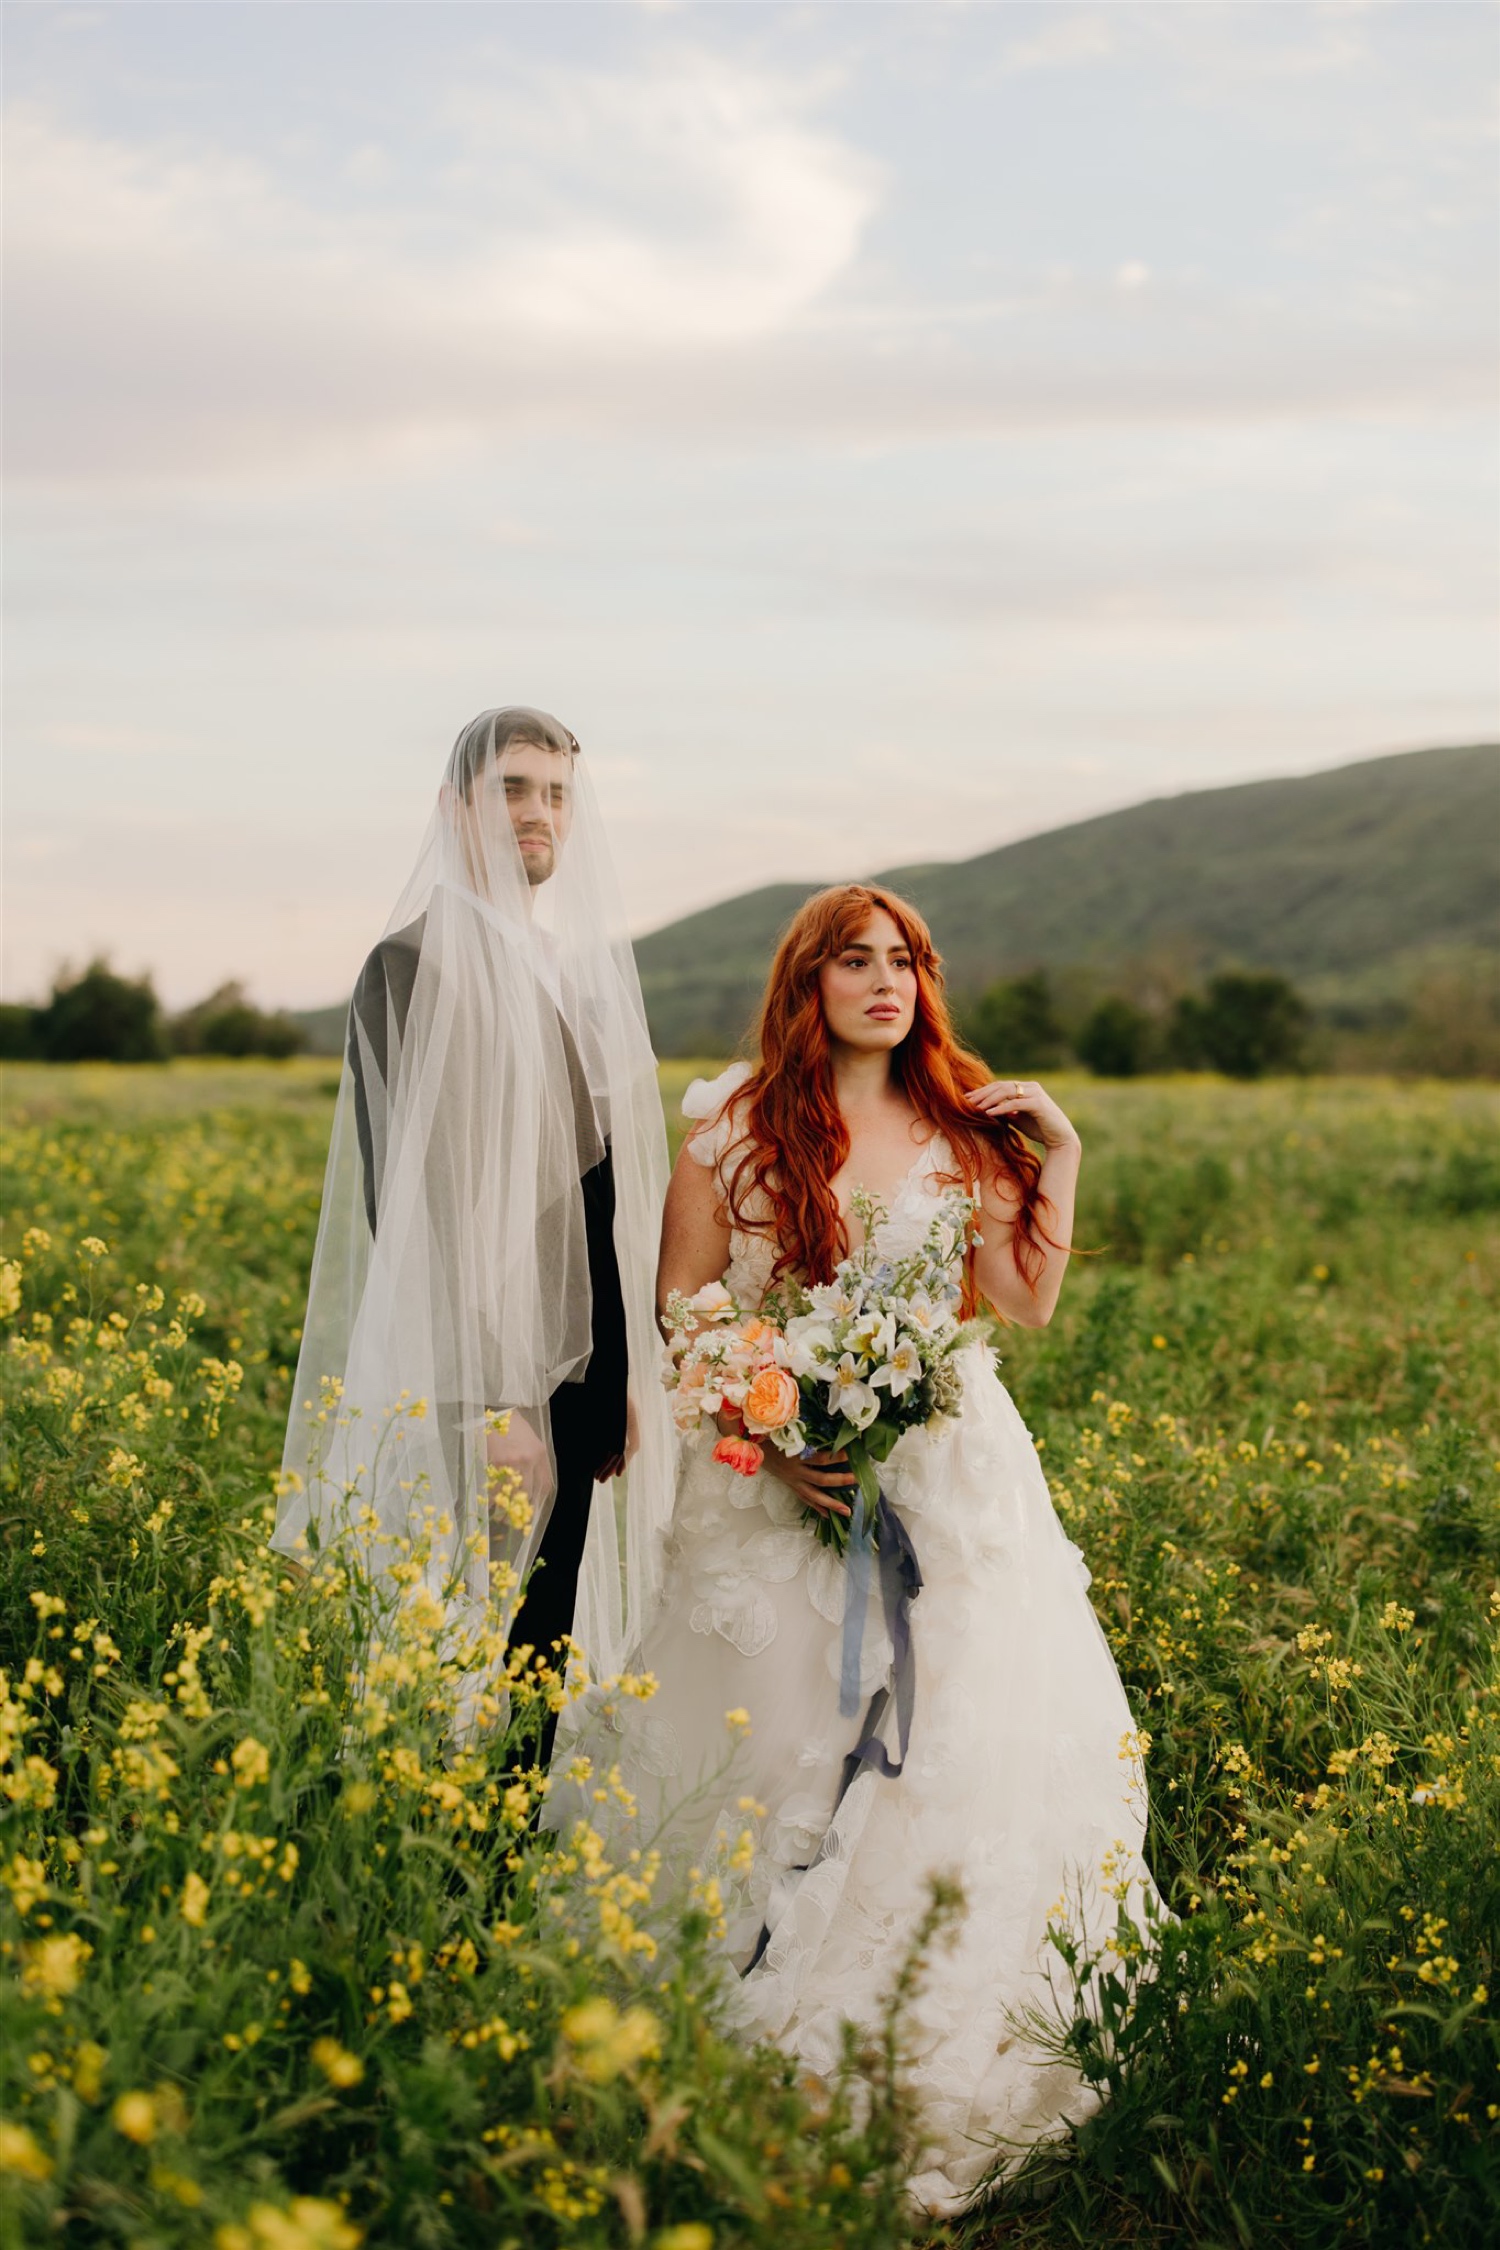 editorial film photography; wedding photography by Hanna Walkowaik